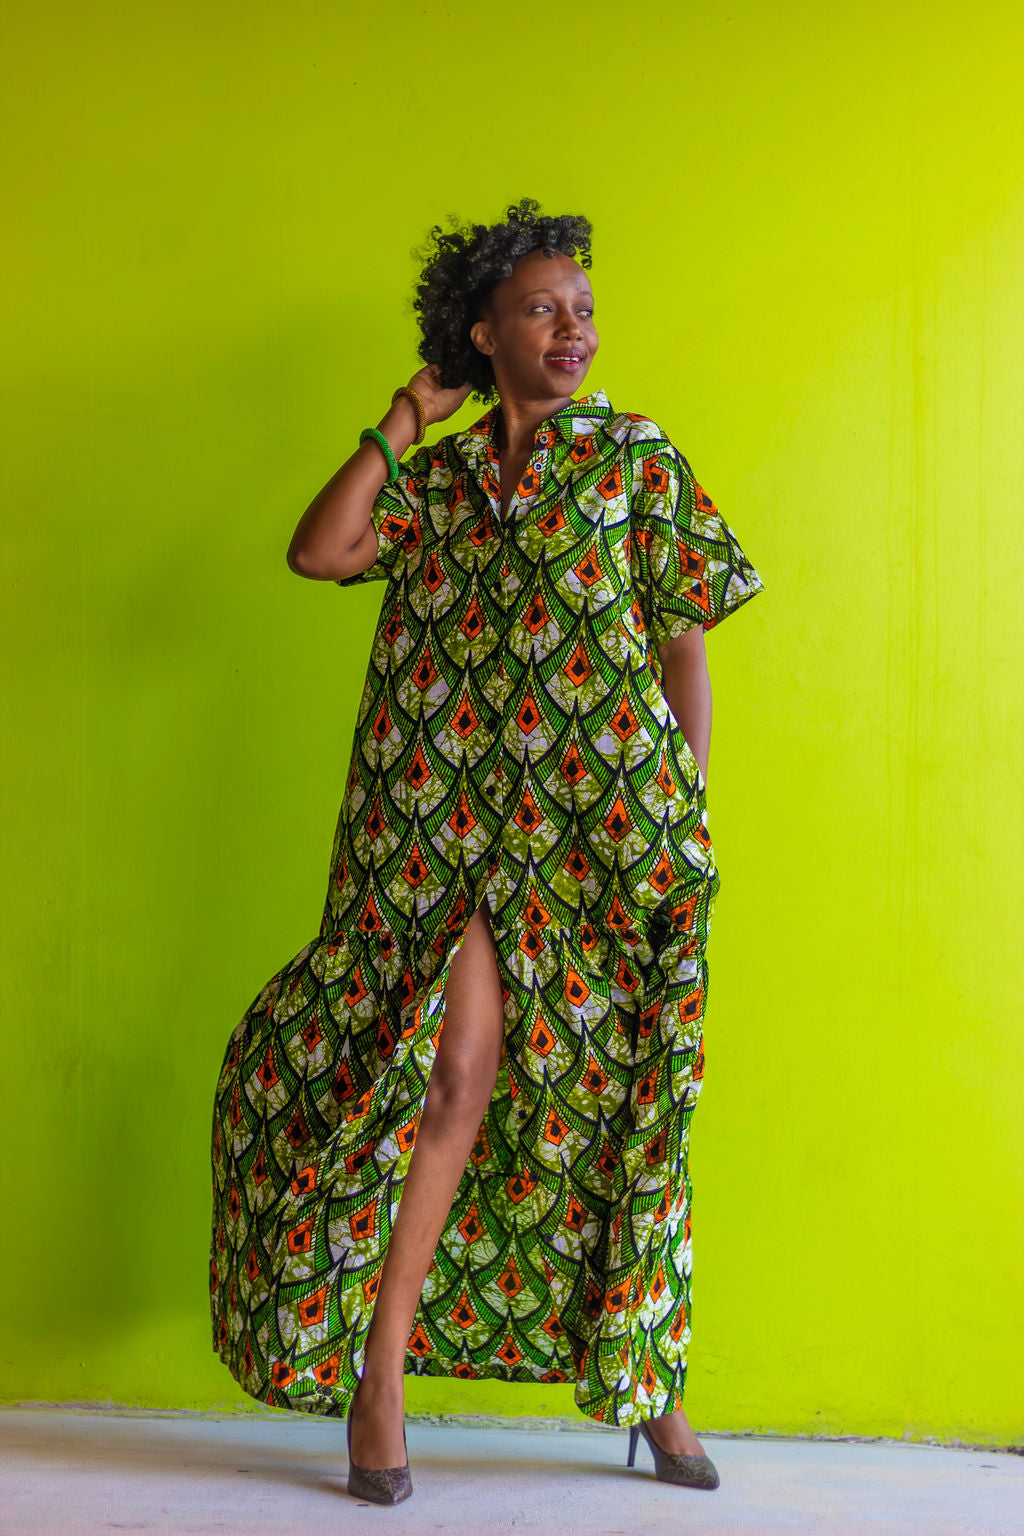 African Print /Ankara/Kitenge Maxi Dress - Lime Green /Orange/Black Tribal Print Short Sleeved Button Down Long Shirt Dress